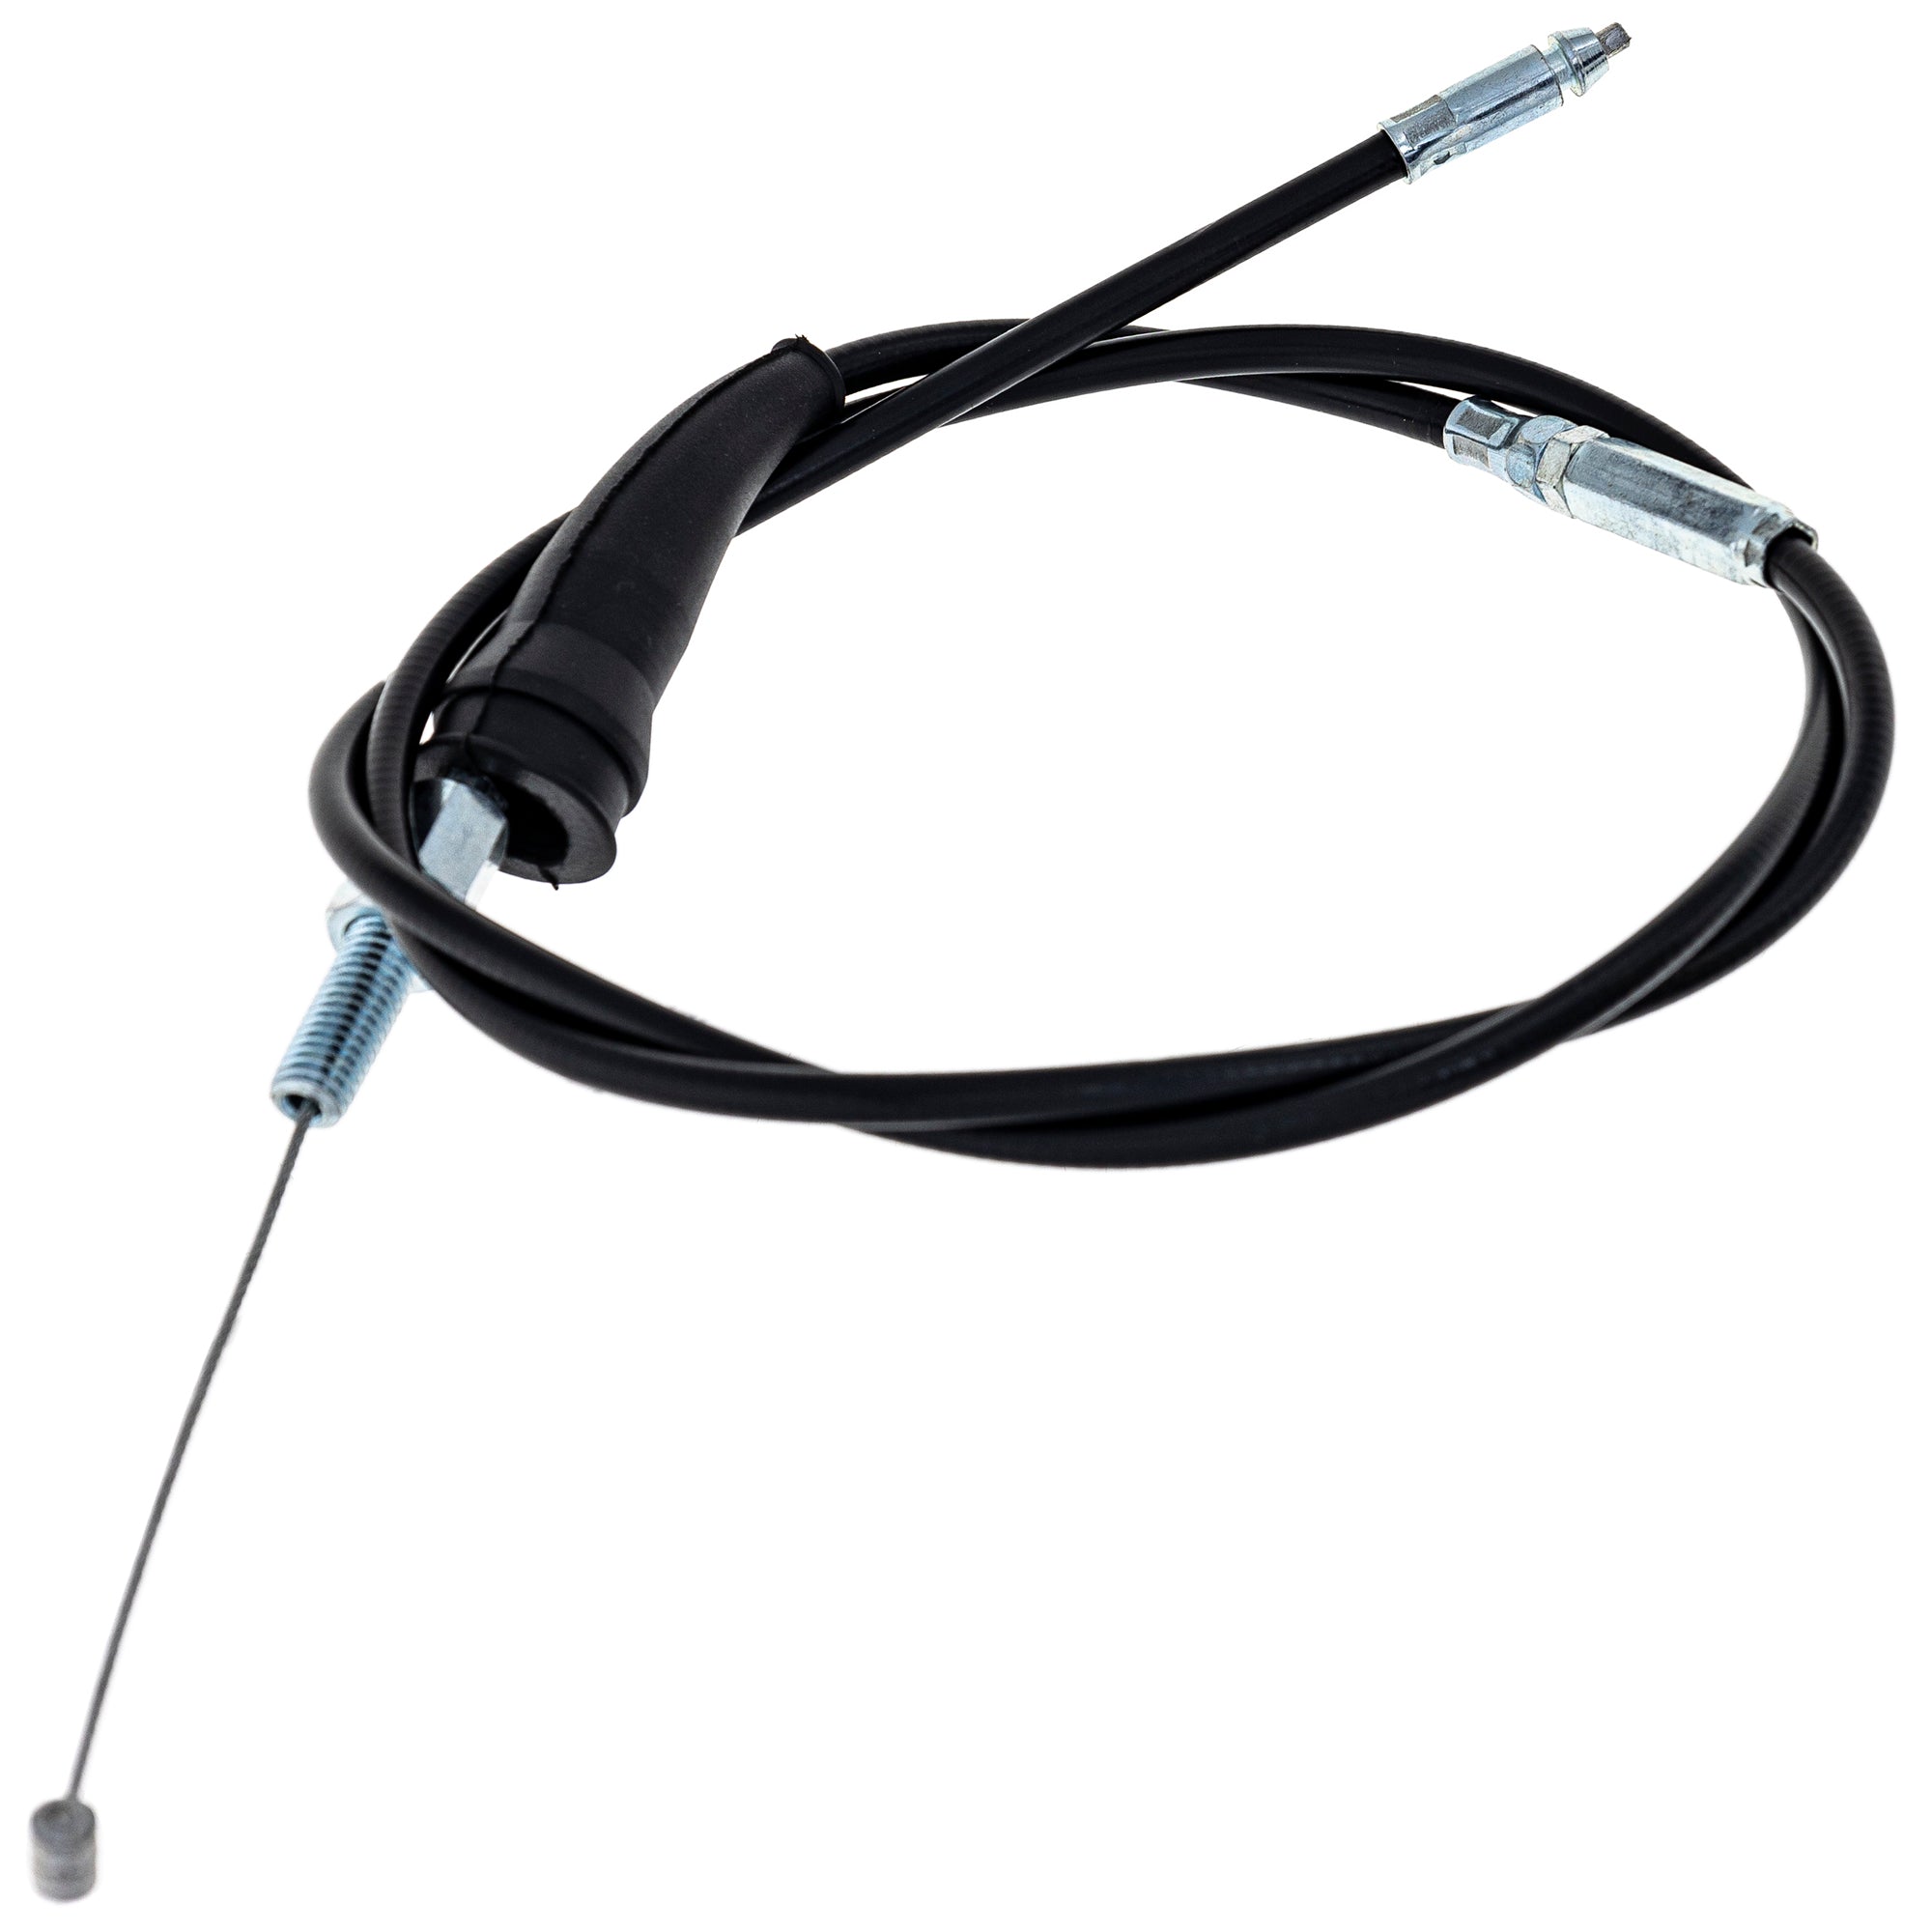 Throttle Cable for Kawasaki KDX200 KX125 KX250 KX500 54012-0097